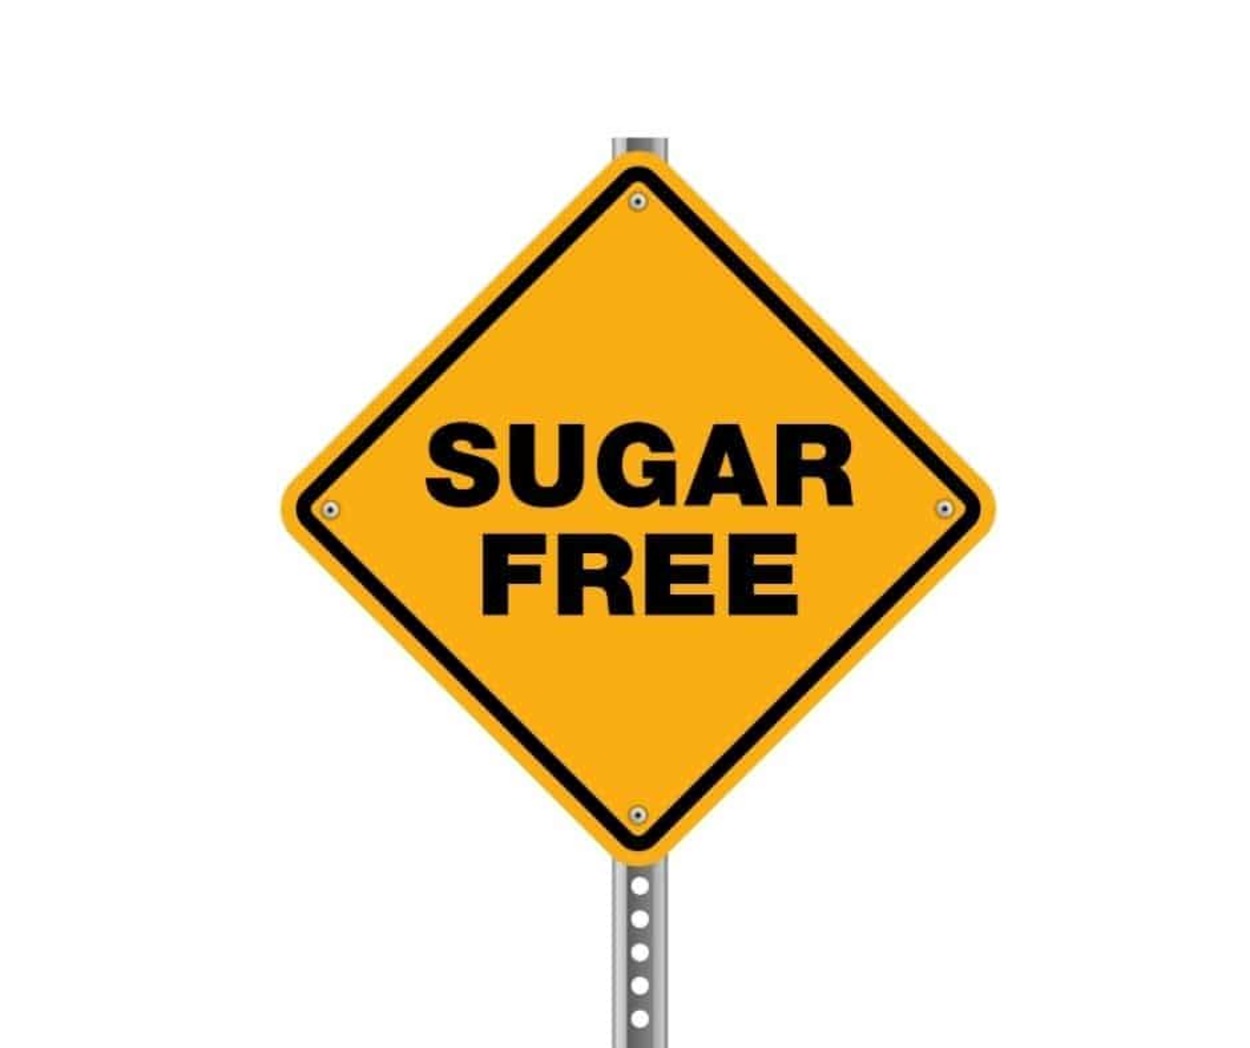 Sugar free sign